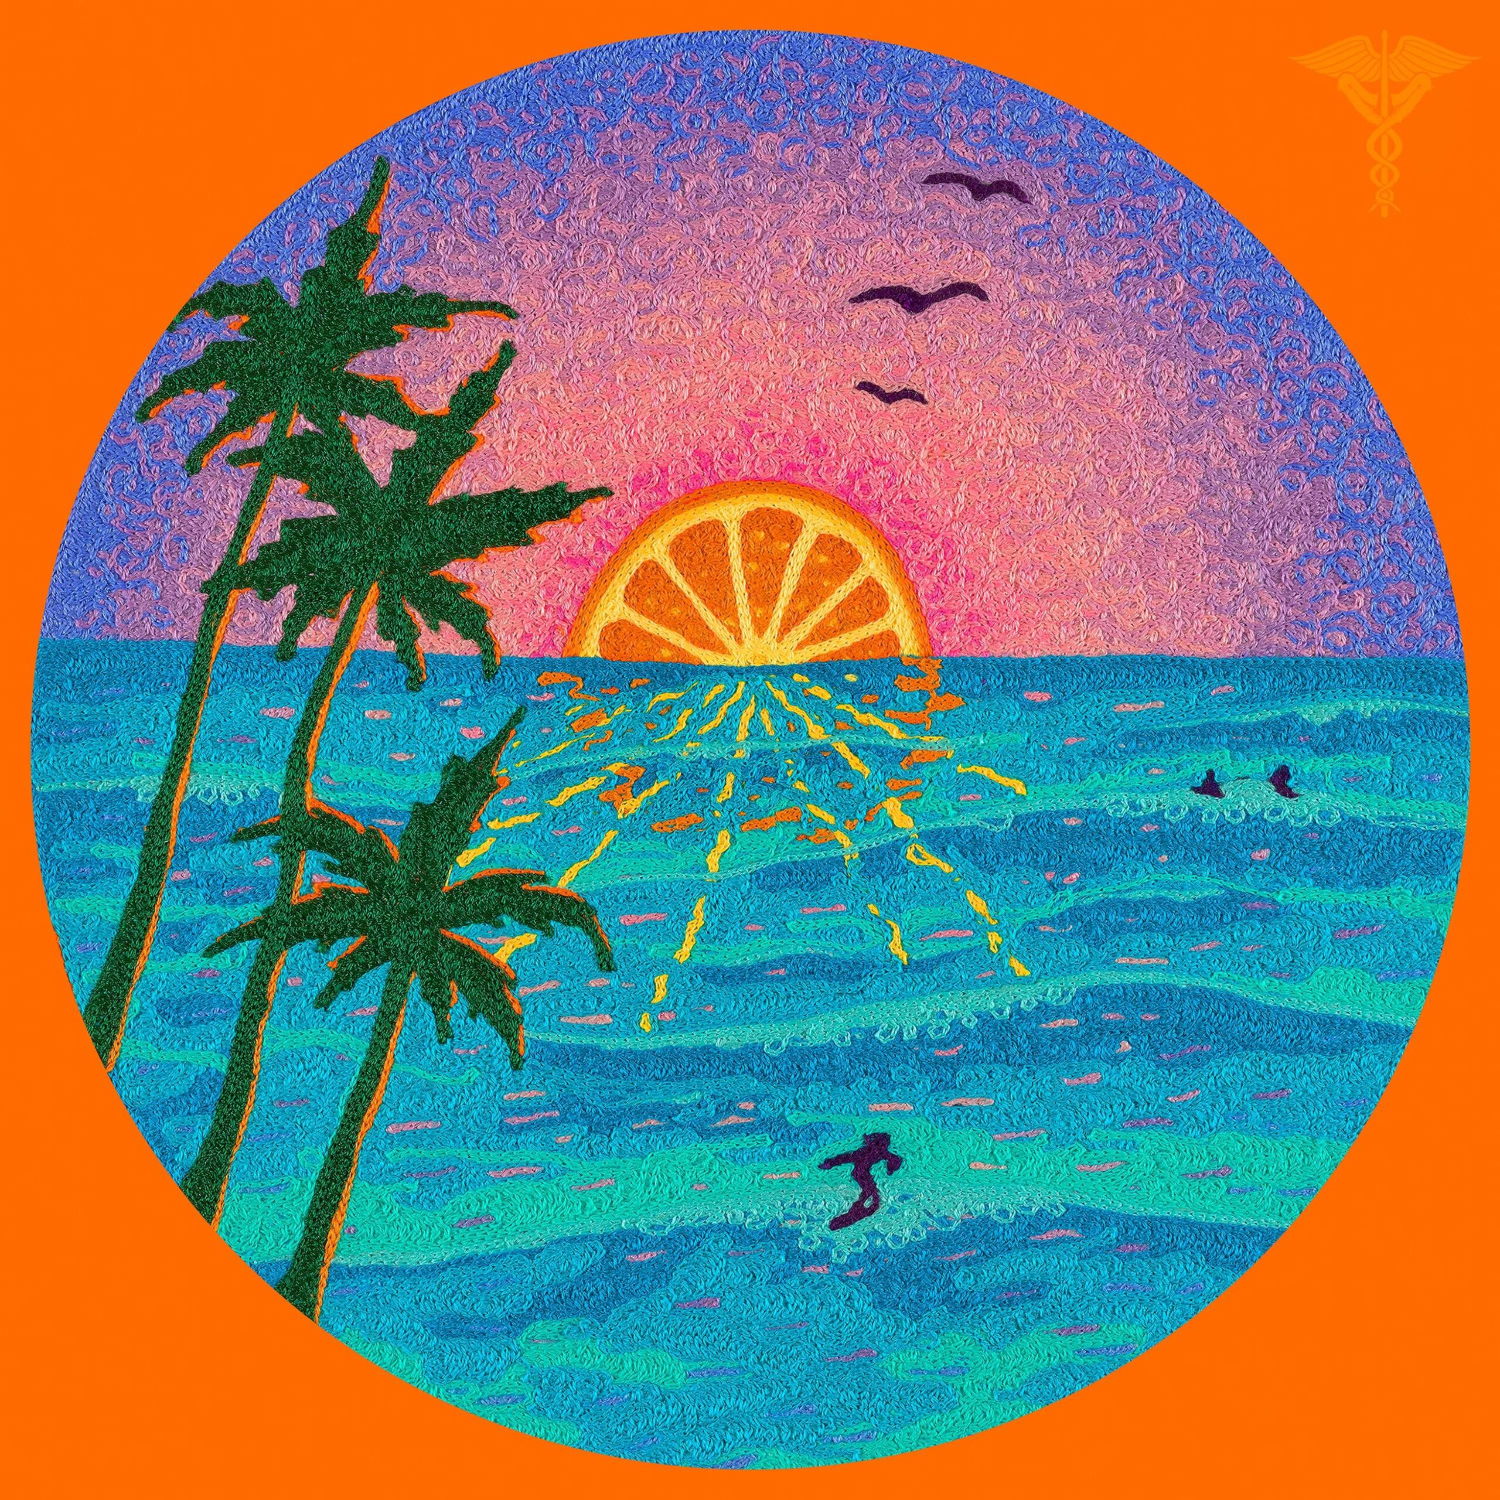 Featured Image for “Orange Sunset”